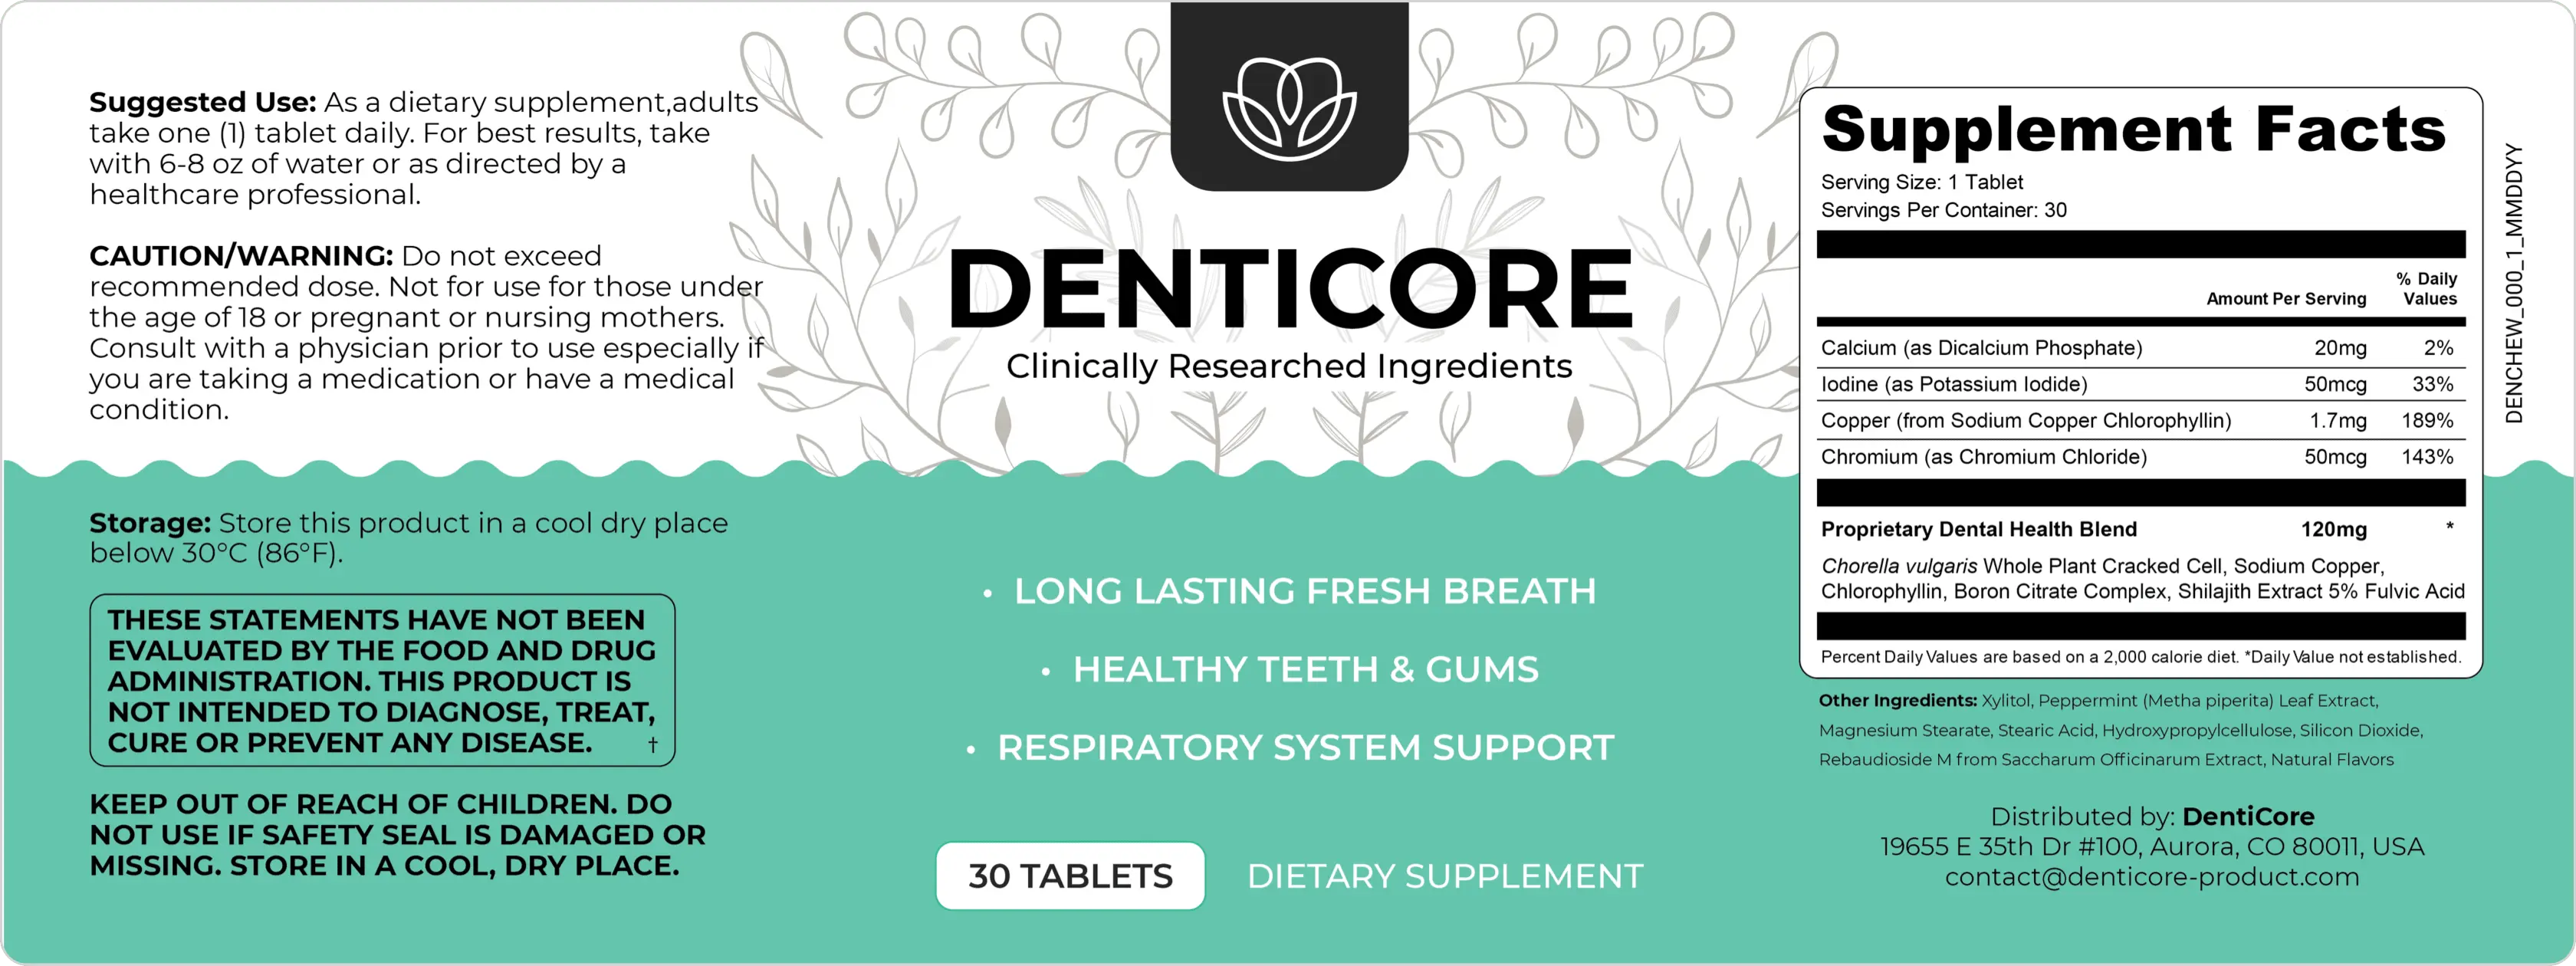 denticore-ingredients-to-buy